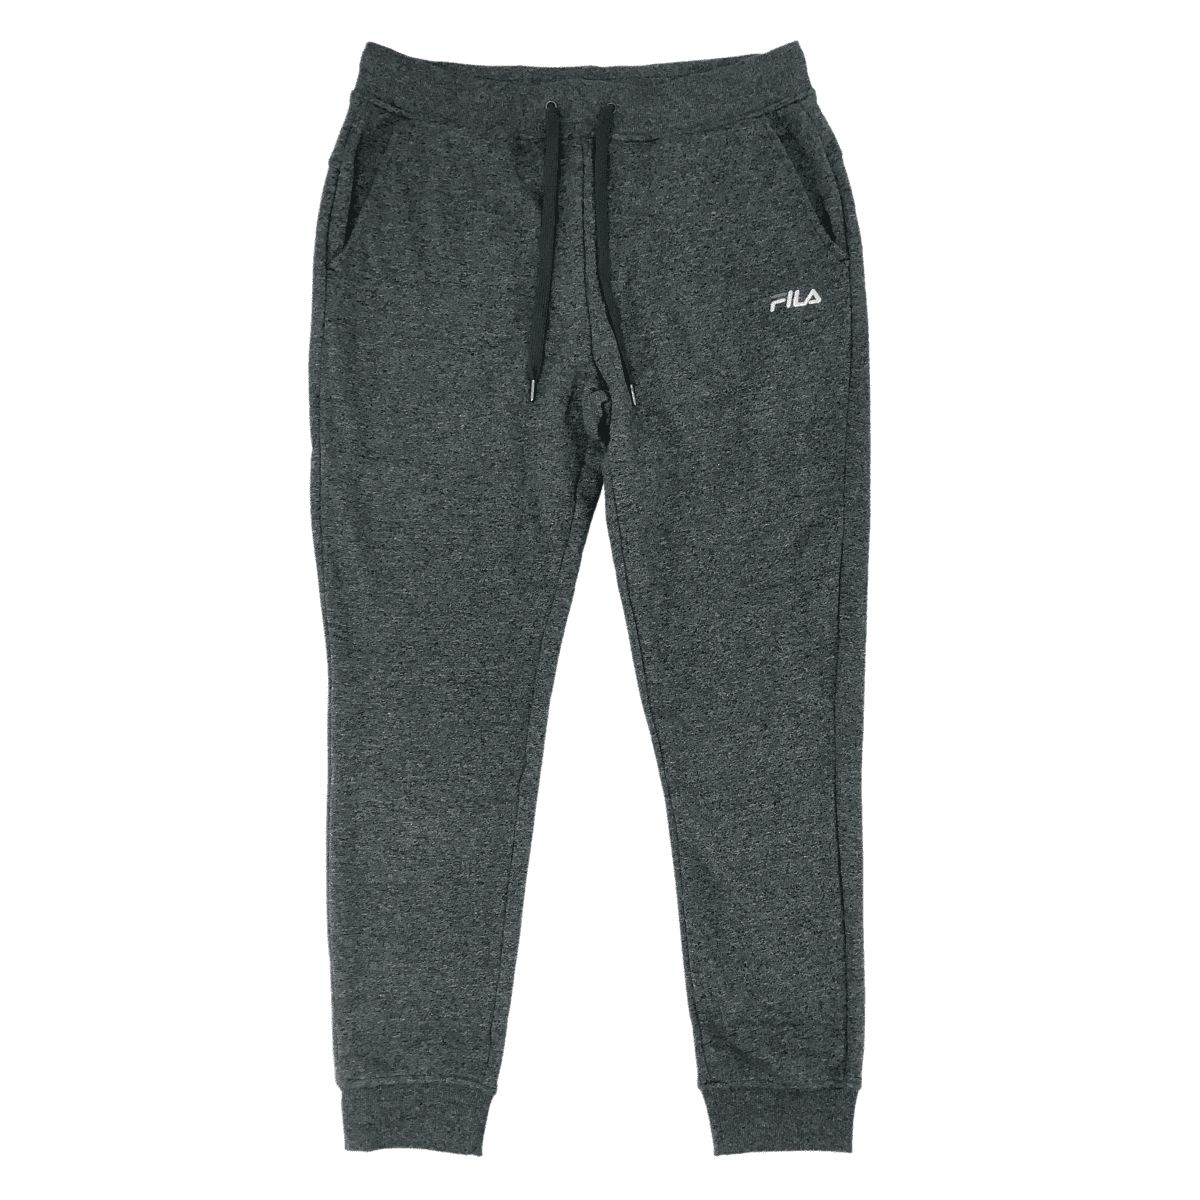 Fila Men's Grey Sweatpants